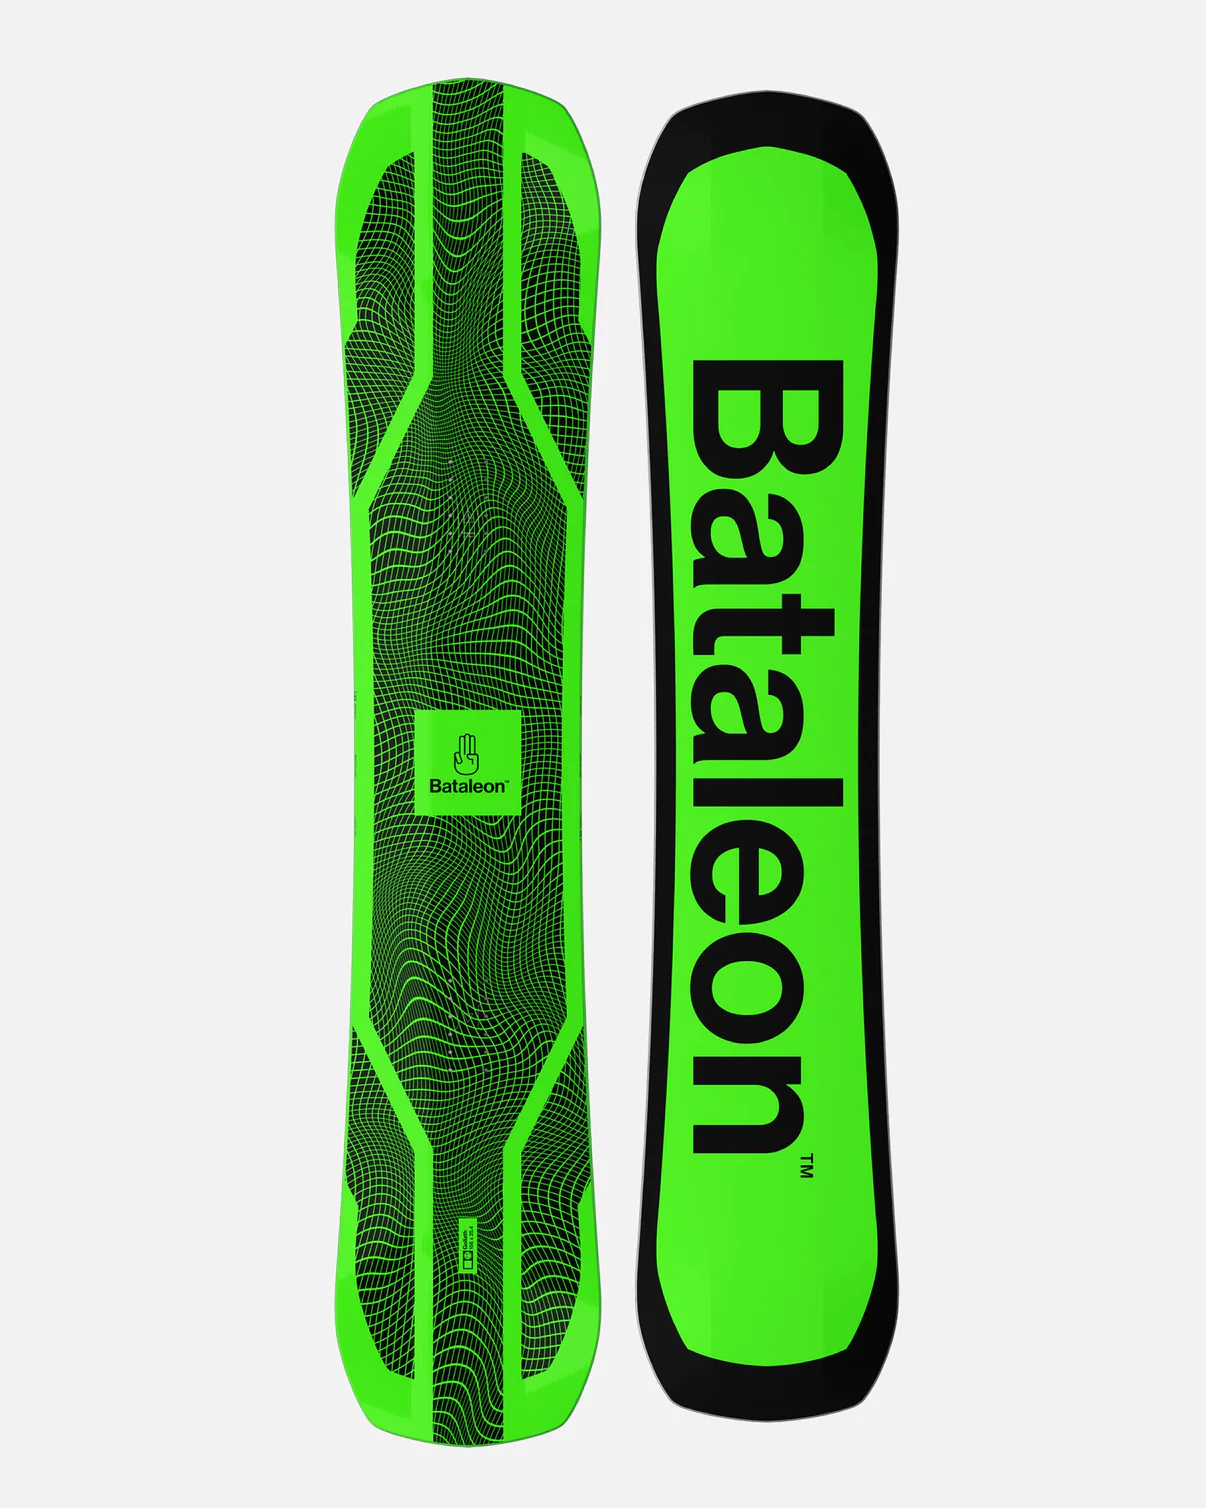 Bataleon Goliath snowboard